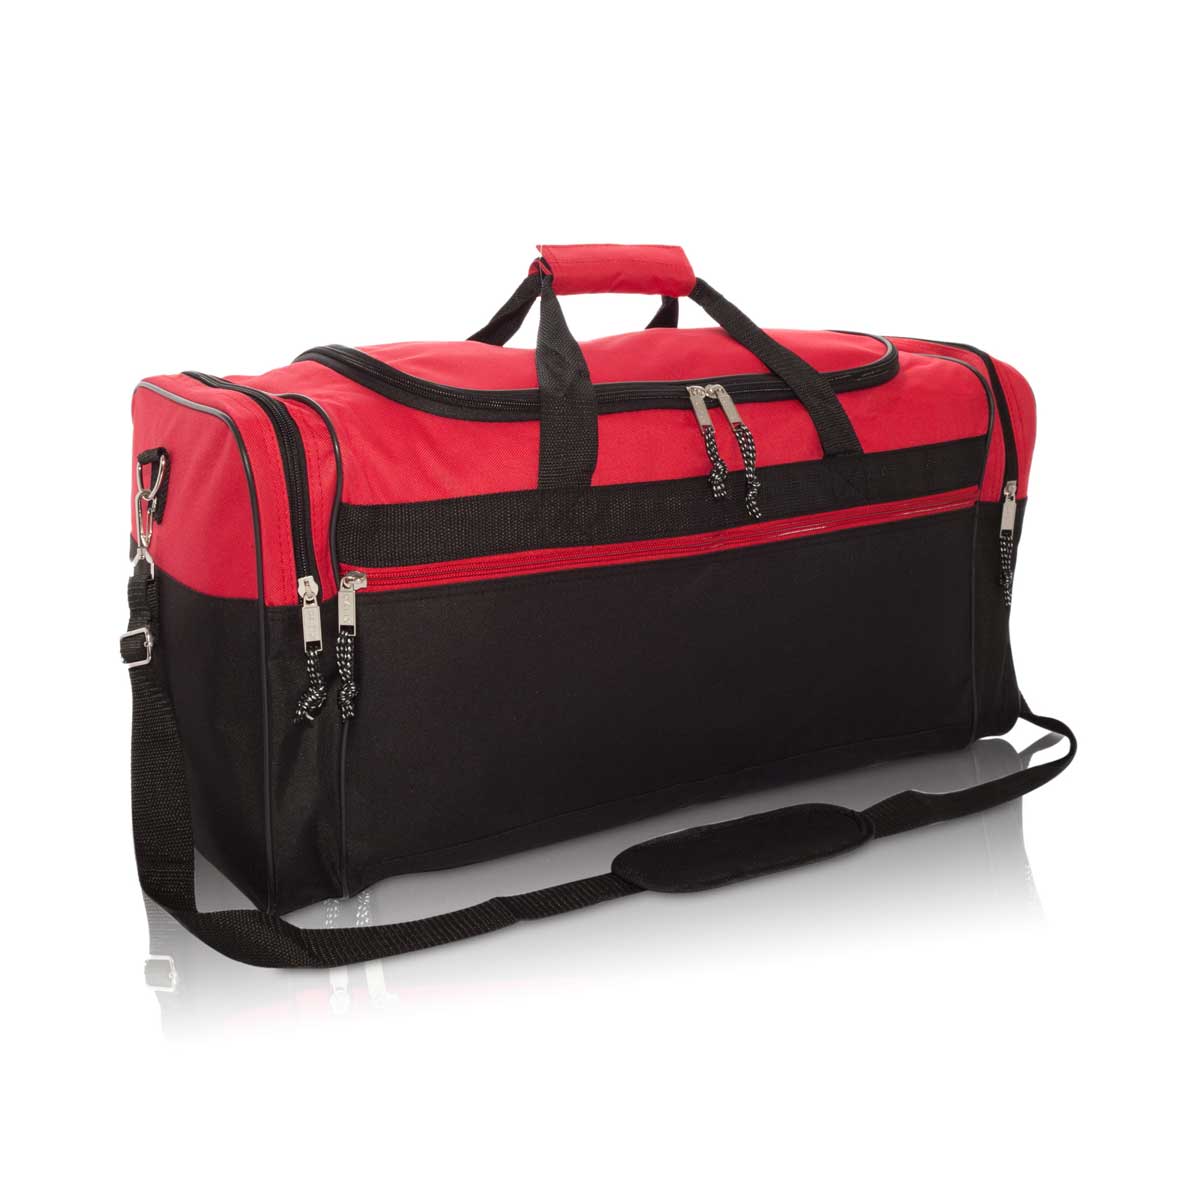 Nylon Travel Handbag Rainbow Gingham Duffle Bags Large Fitness